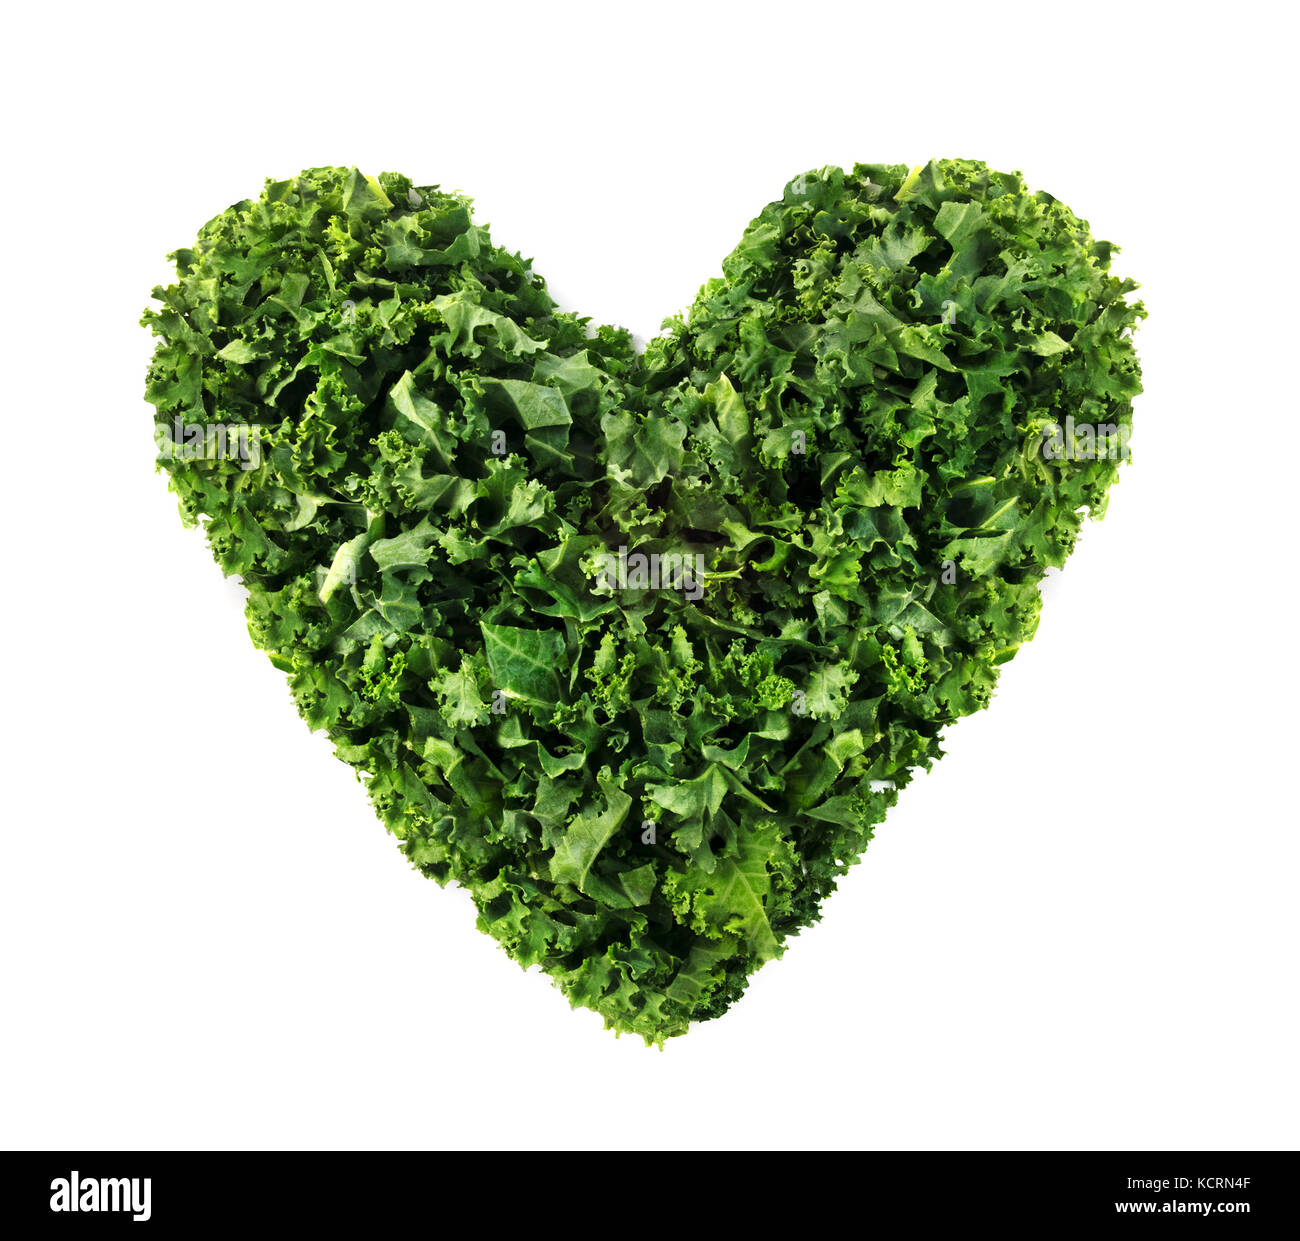 Kale heart shape on a white background. Stock Photo